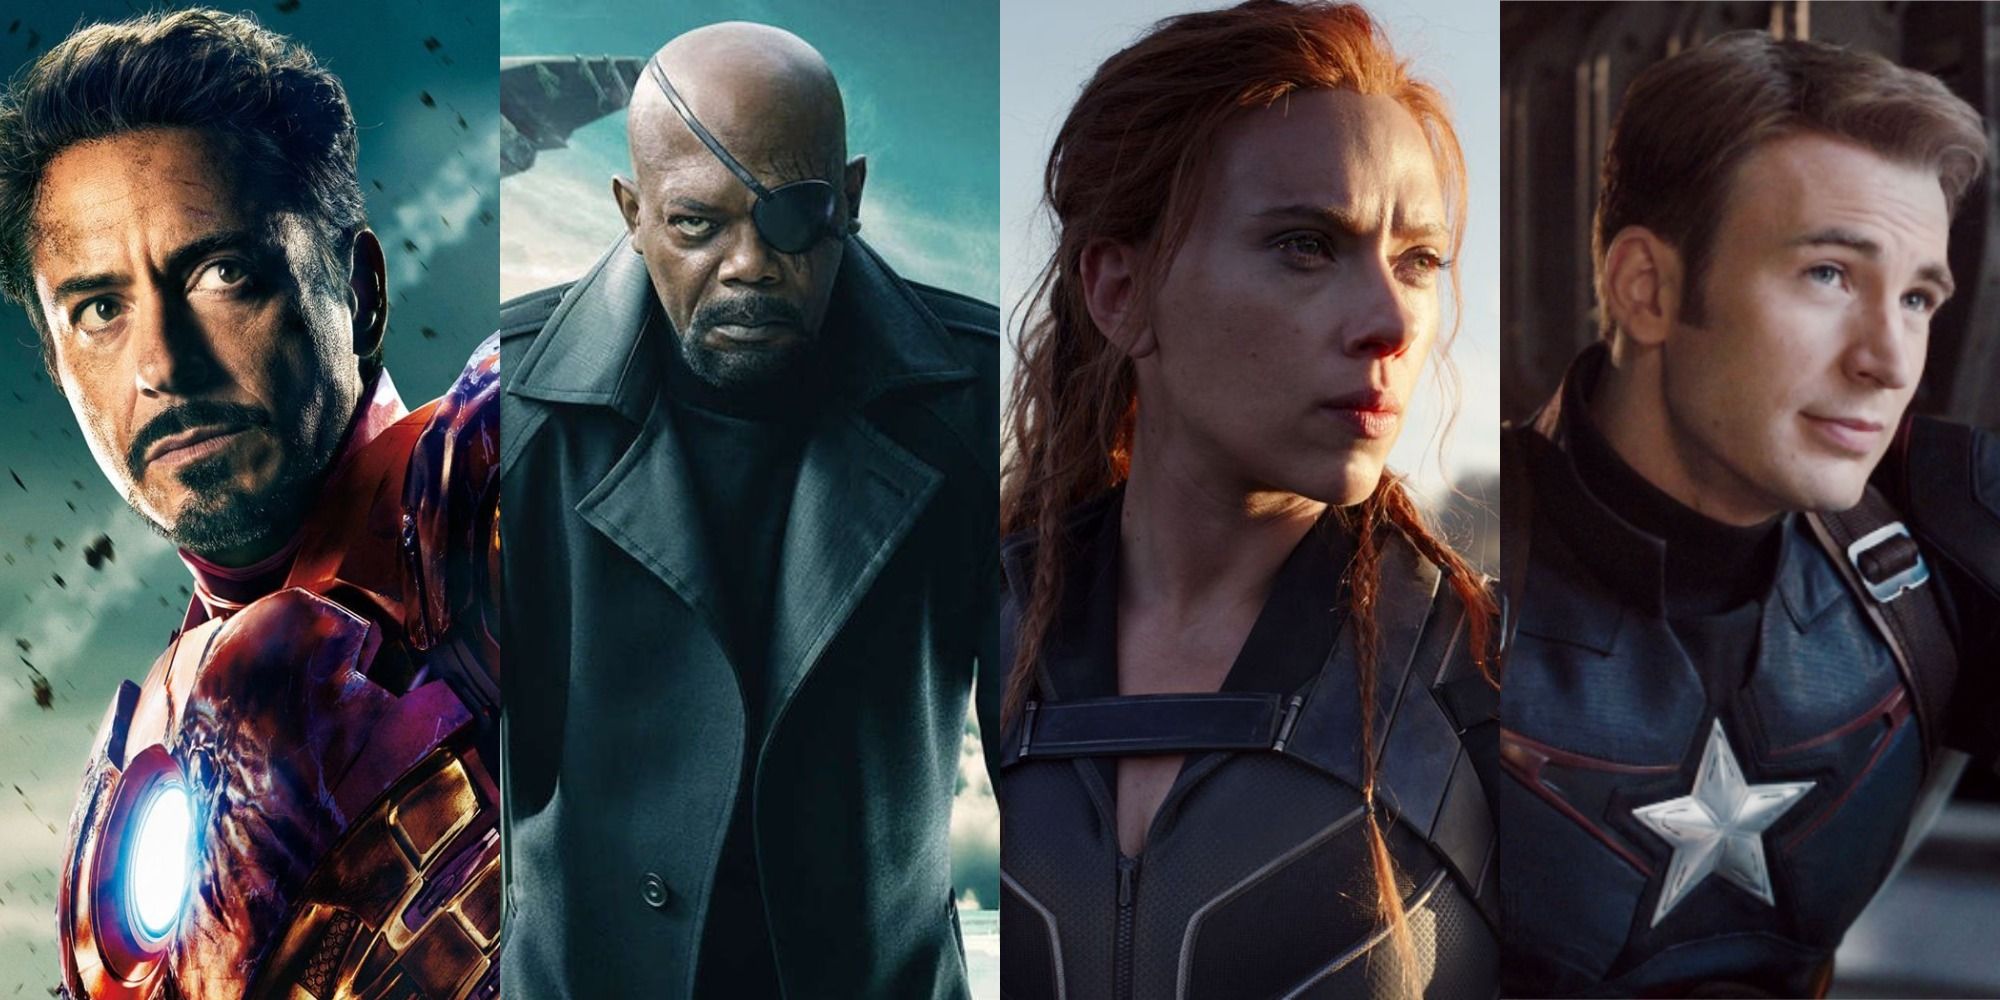 An split image of Iron Man, Nick Fury, Black Widow, Captain America in the MCU